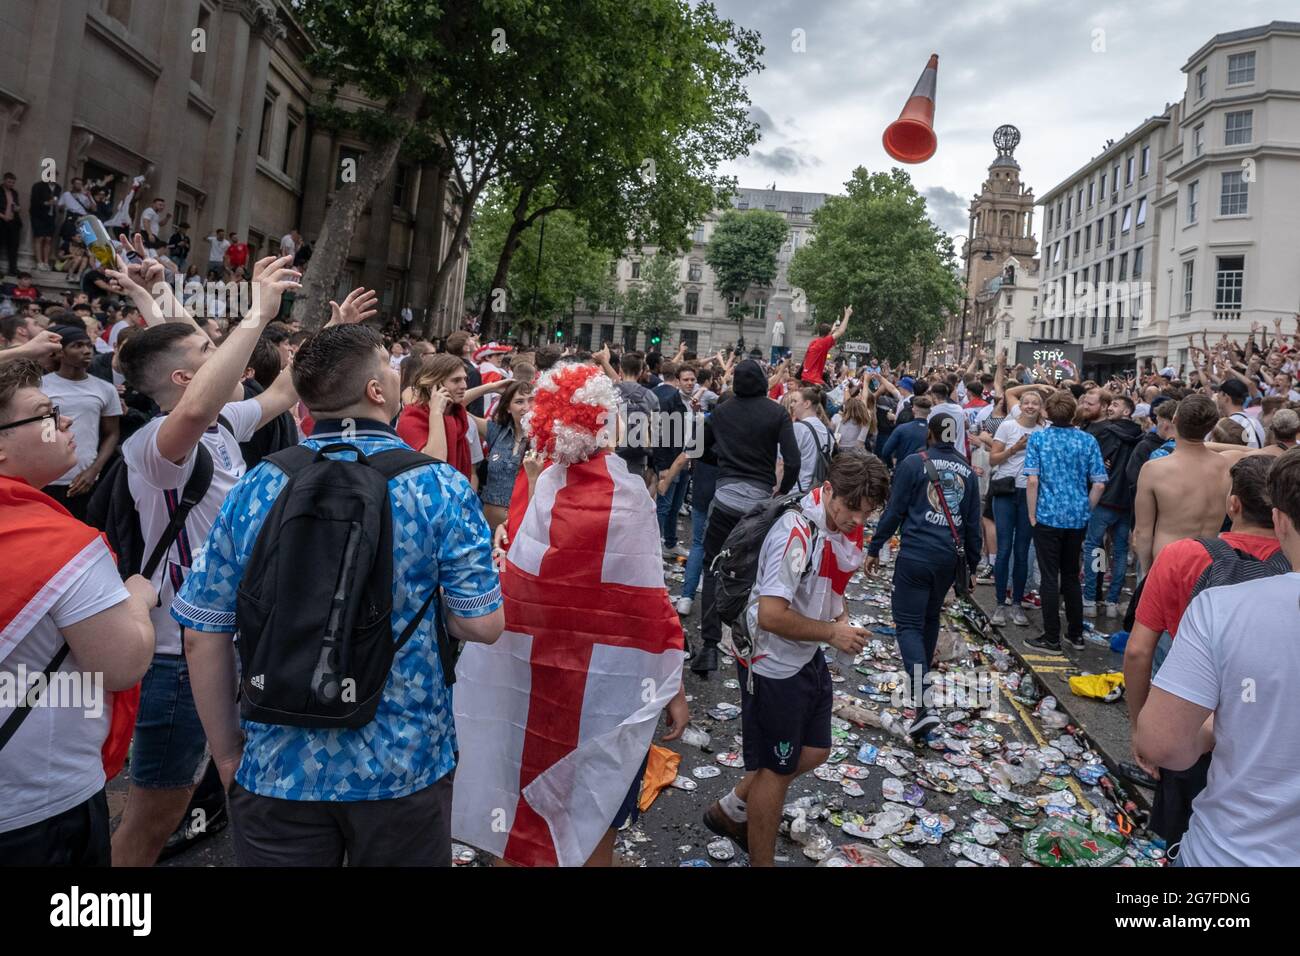 Euro 2020: Disorderly behaviour as thousands of football fans crowd near Trafalgar Square ahead of England vs Italy match finals. London, UK. Stock Photo